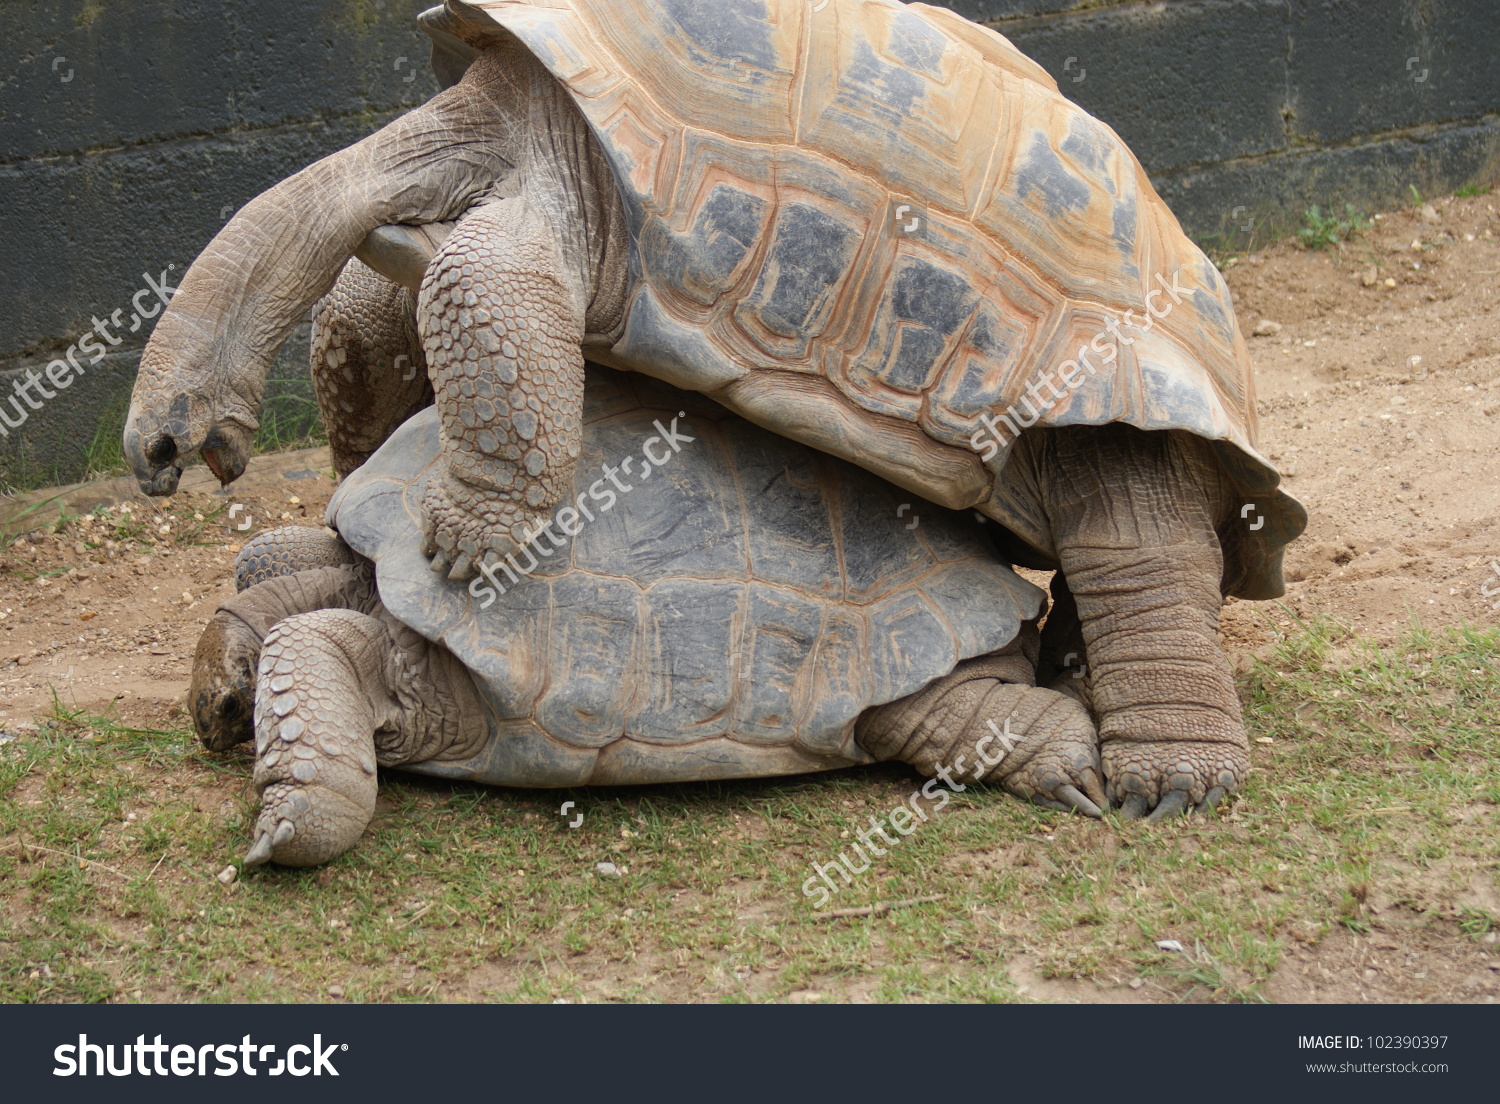 Nice Images Collection: Aldabra Giant Tortoise Desktop Wallpapers